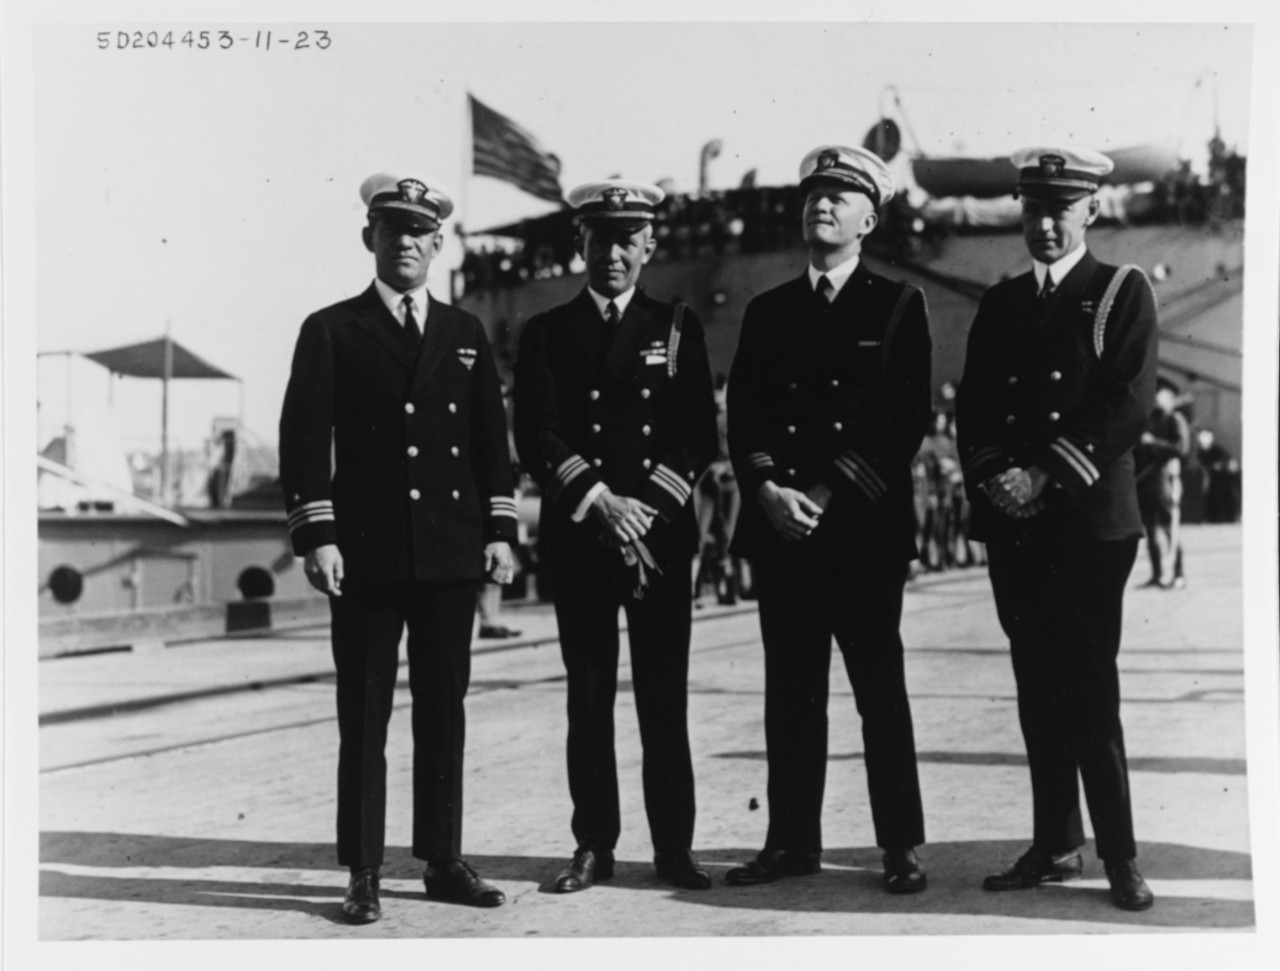 Staff at Naval Air Station, San Diego, California, 17 November 1923.